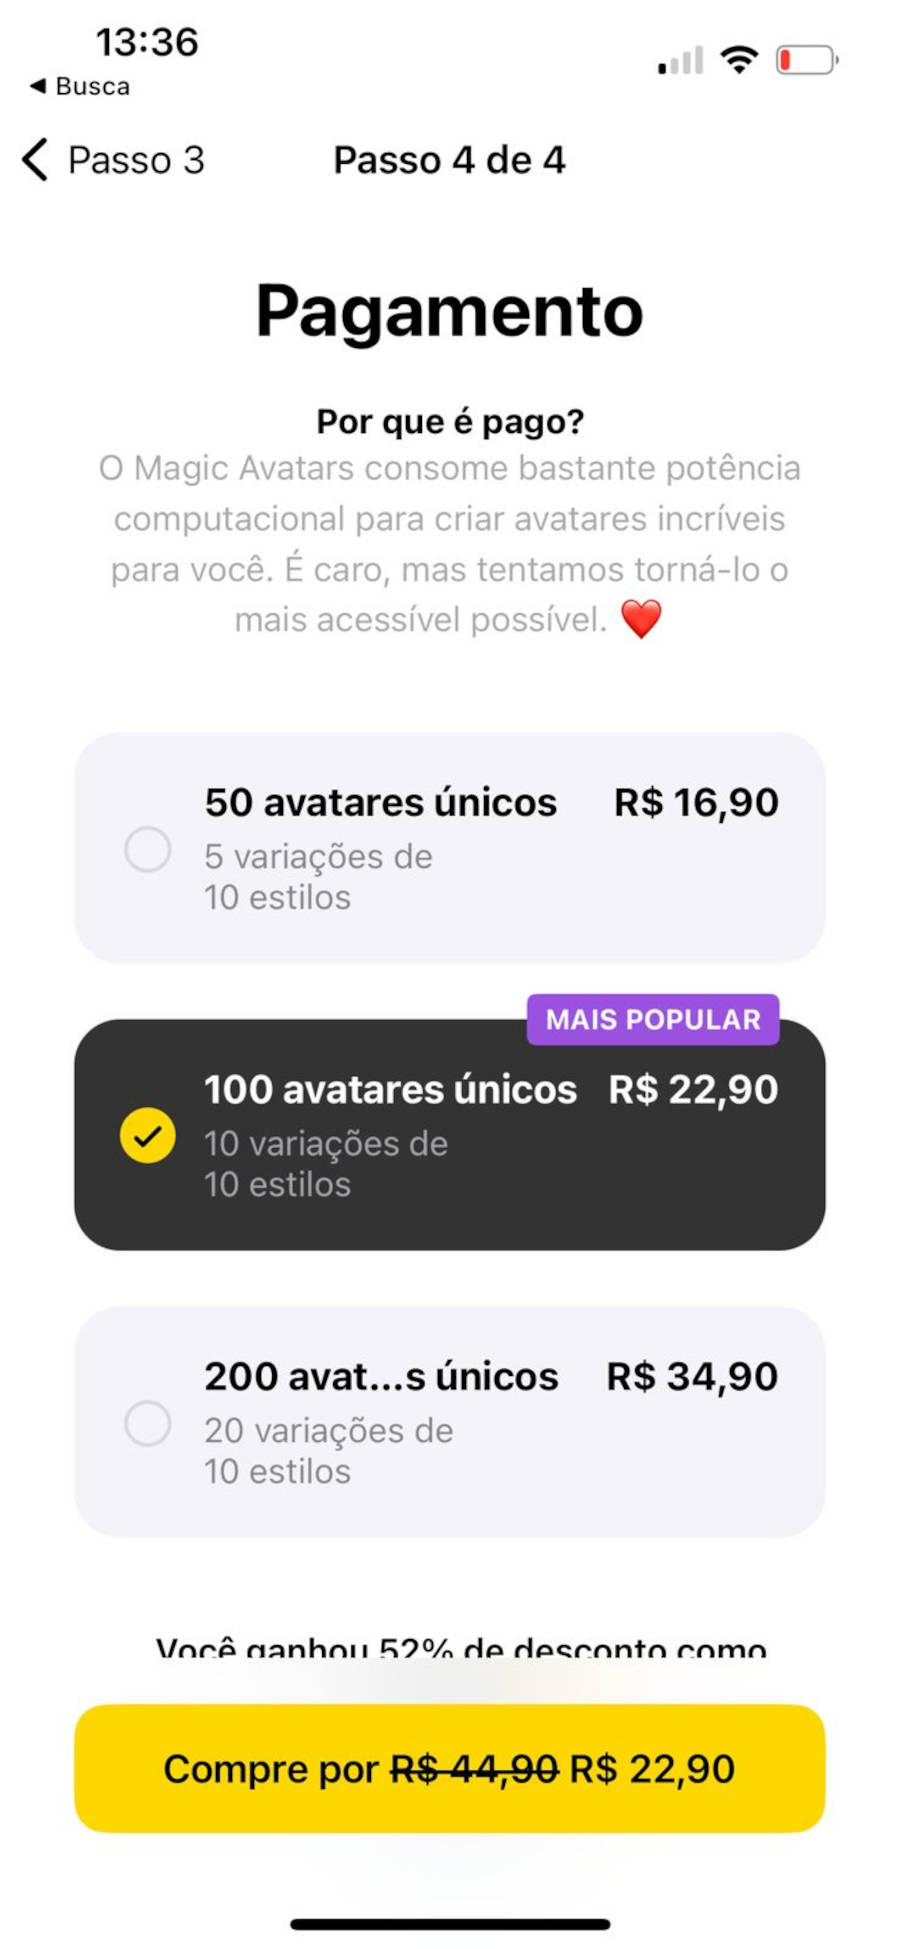 Price Lensa for iOS.